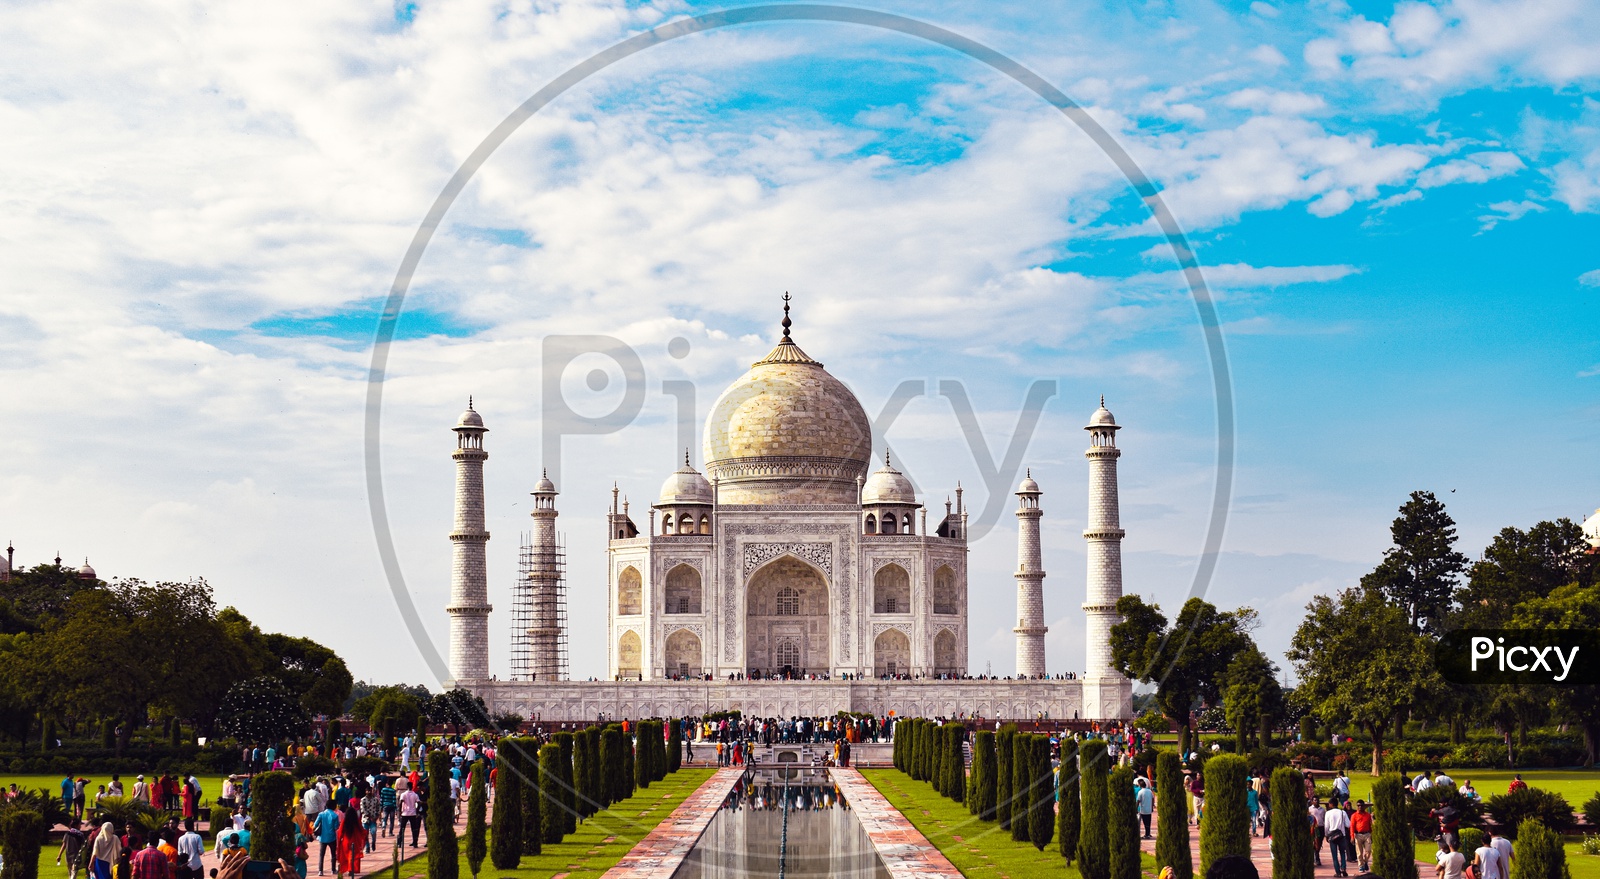 Taj Mahal: The Monument of Love